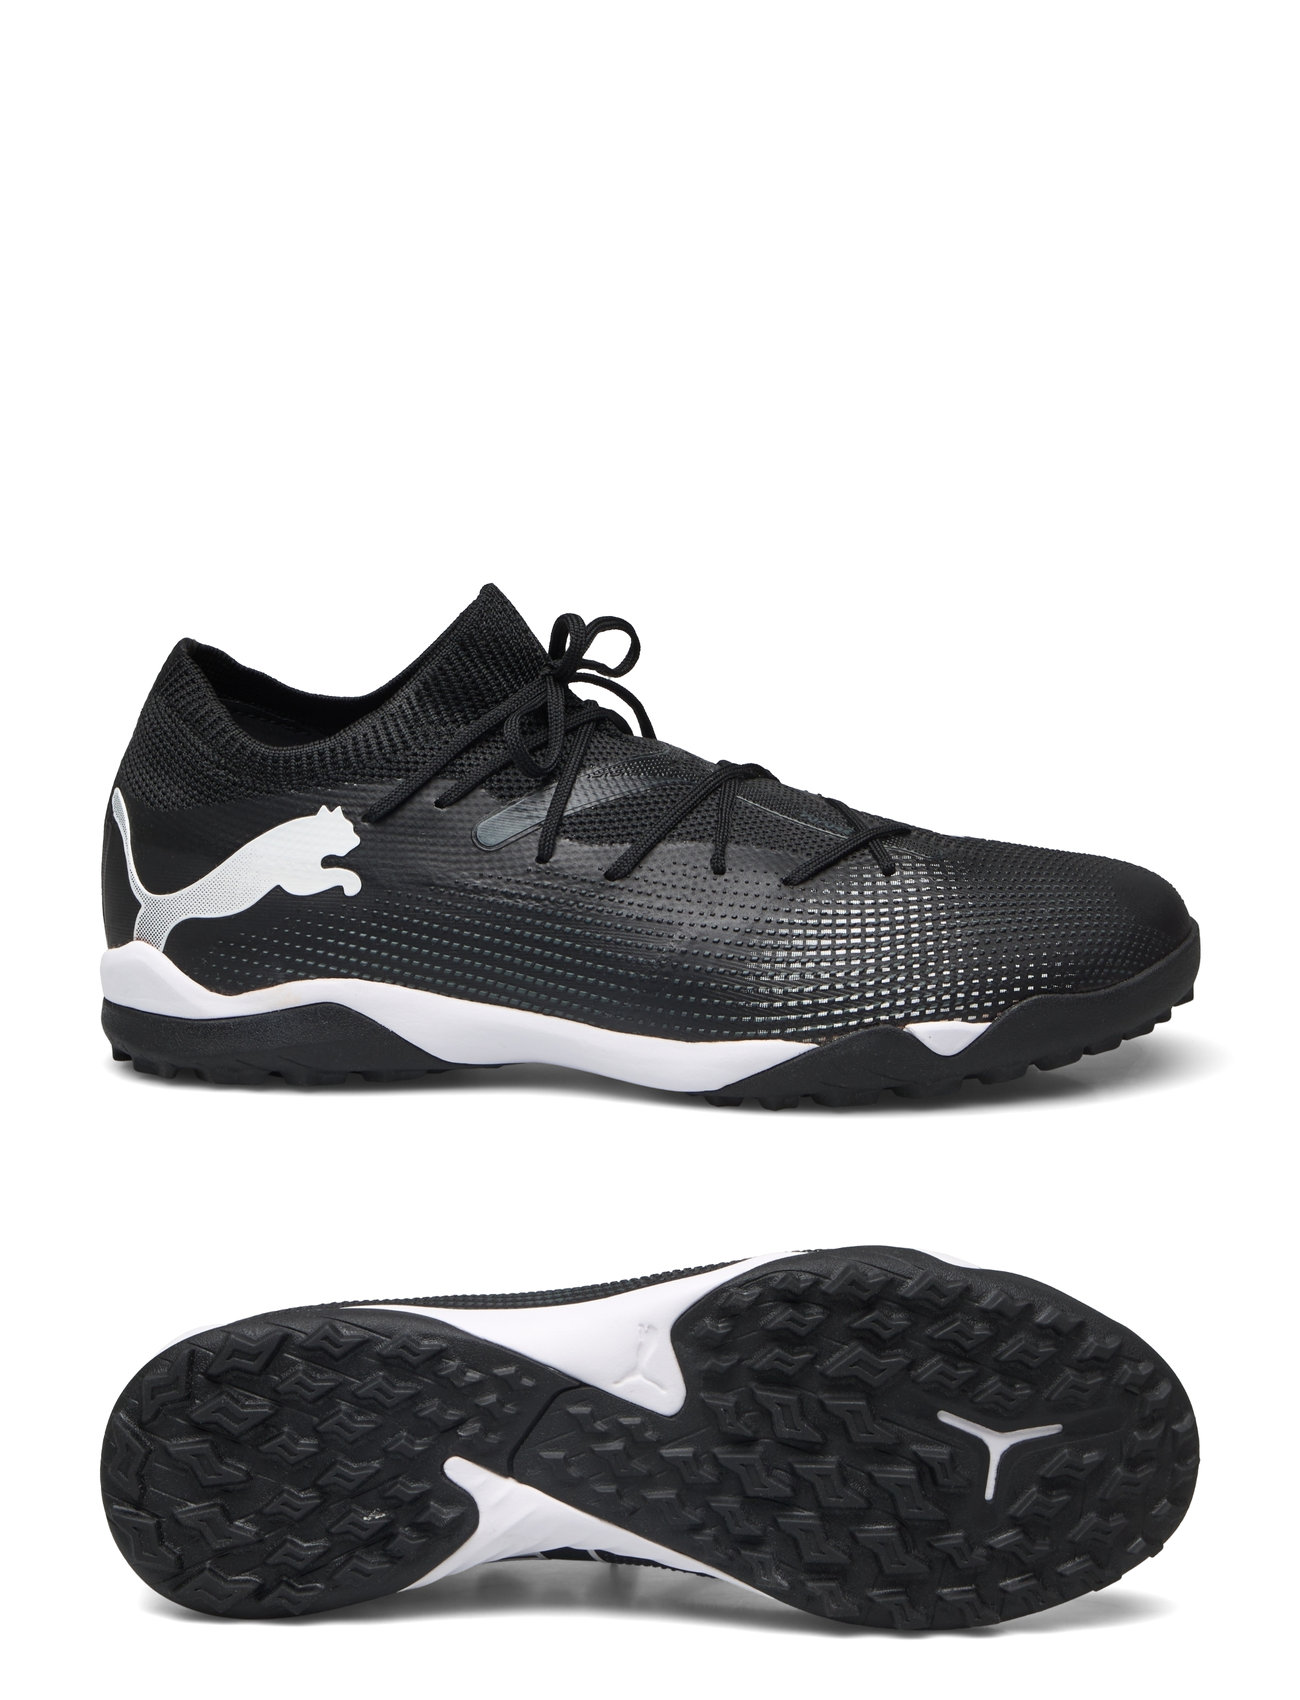 Future 7 Match Tt Sport Sport Shoes Football Boots Black PUMA